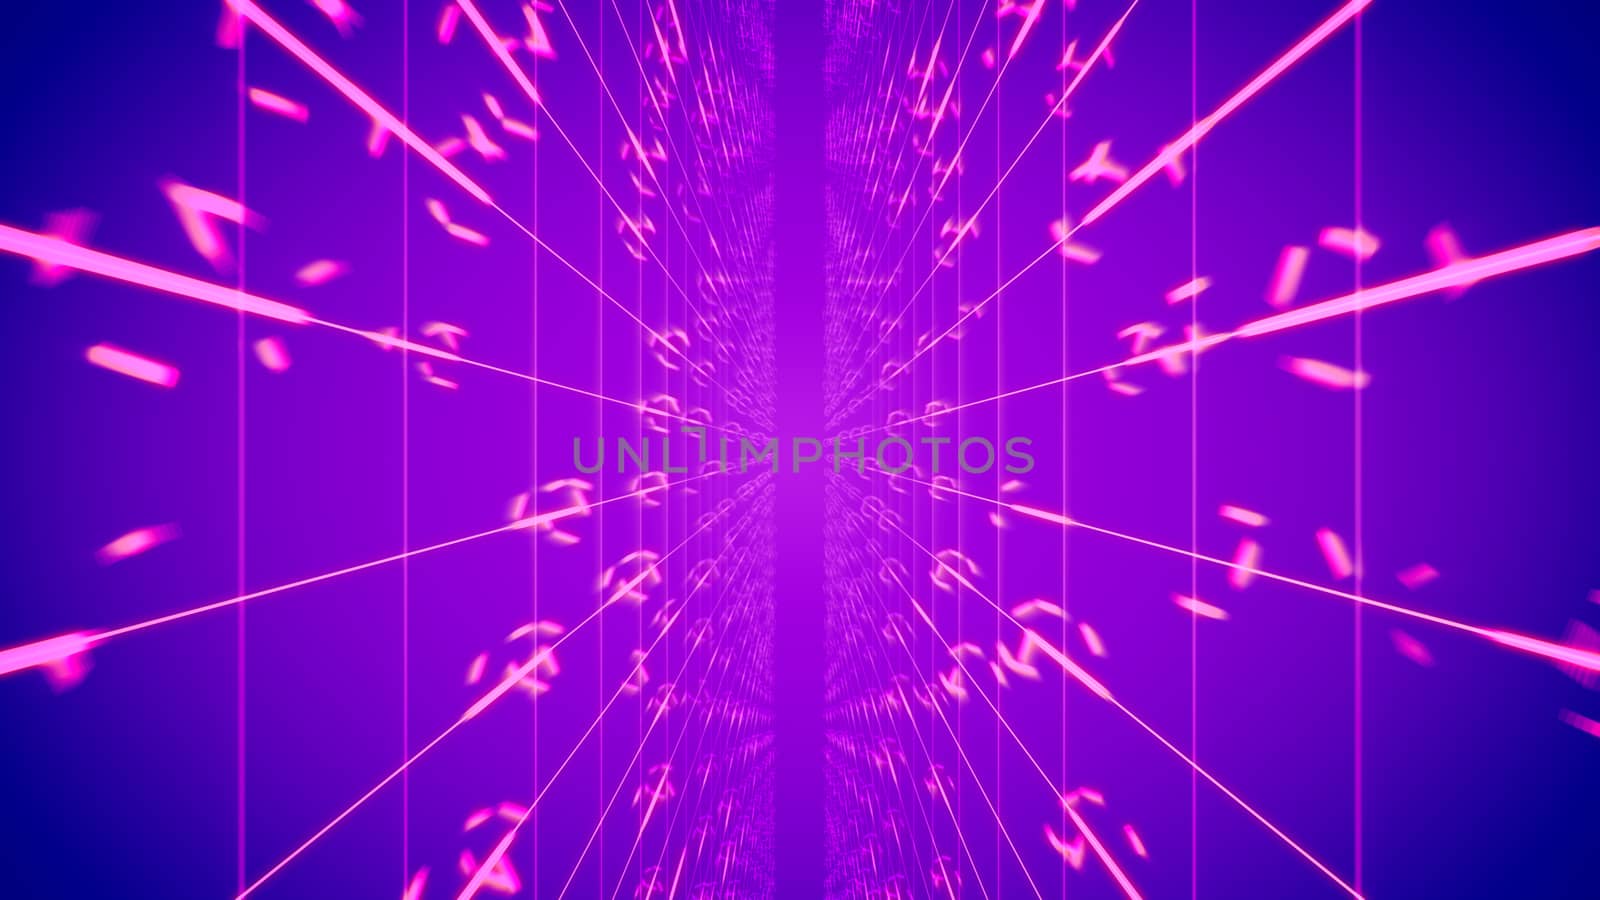 Plazma pink nets and violet background by klss